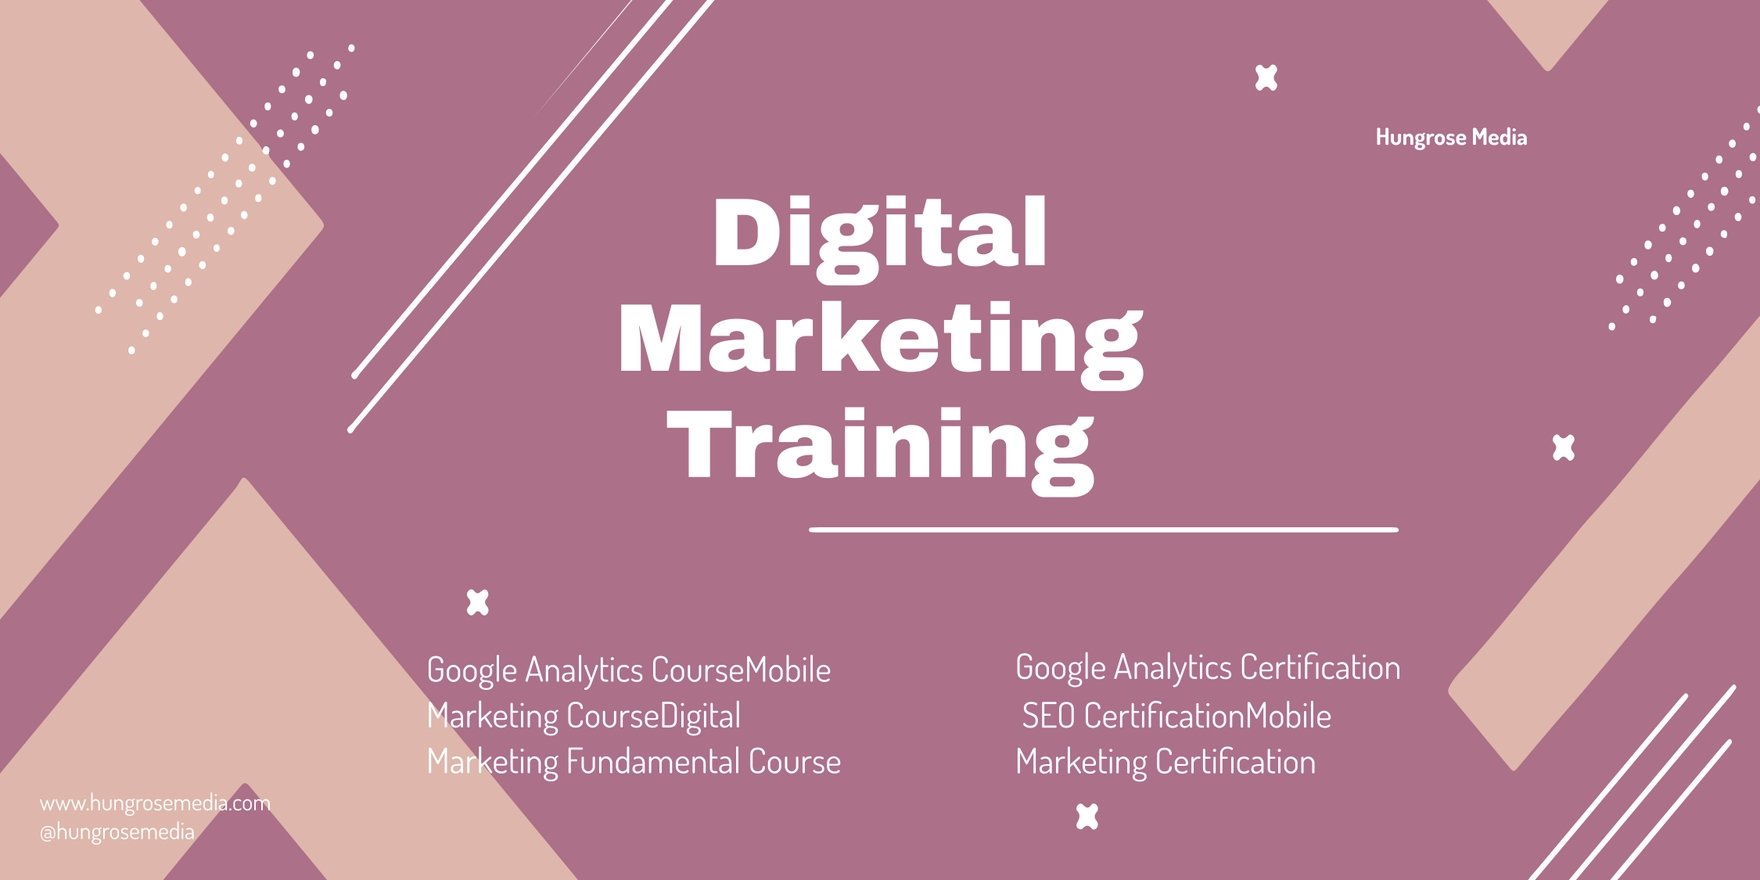 Digital Marketing Training Banner in Word, Illustrator, PSD